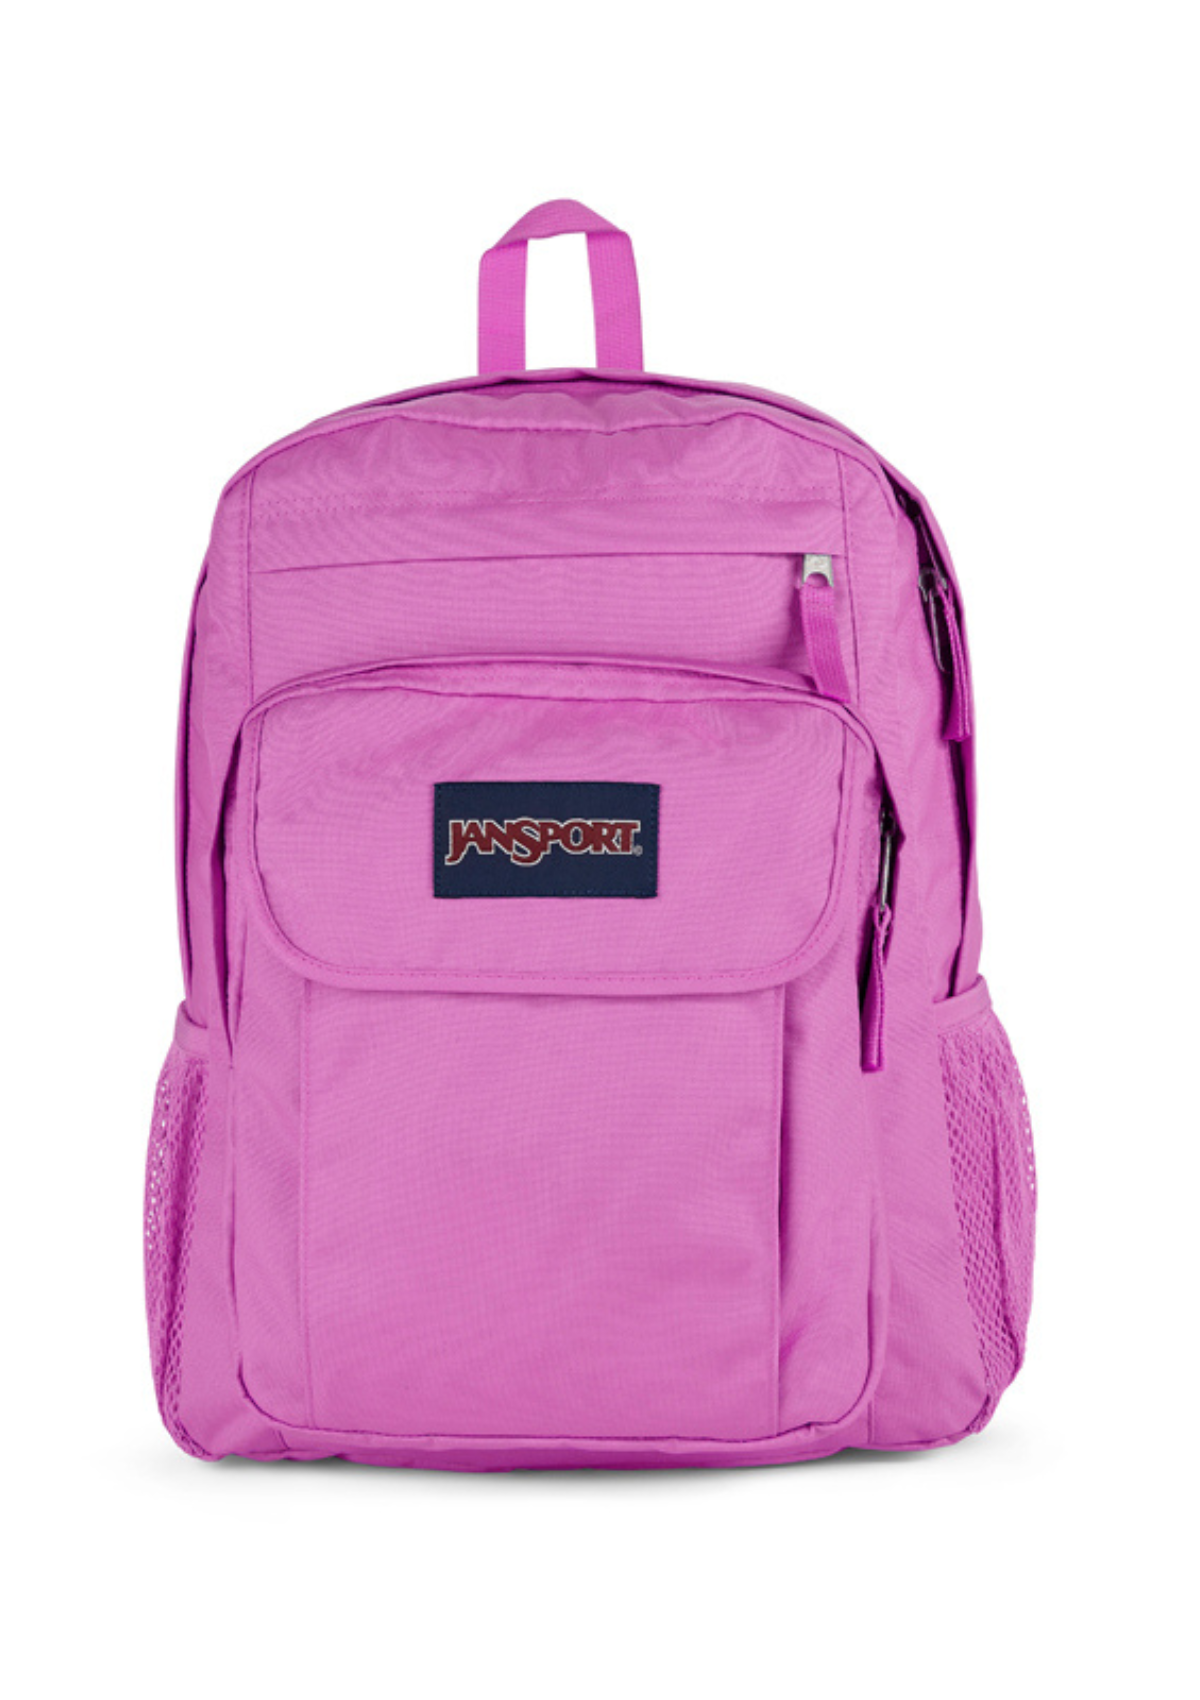 JanSport Backpacks Union Pack Purple Orchid